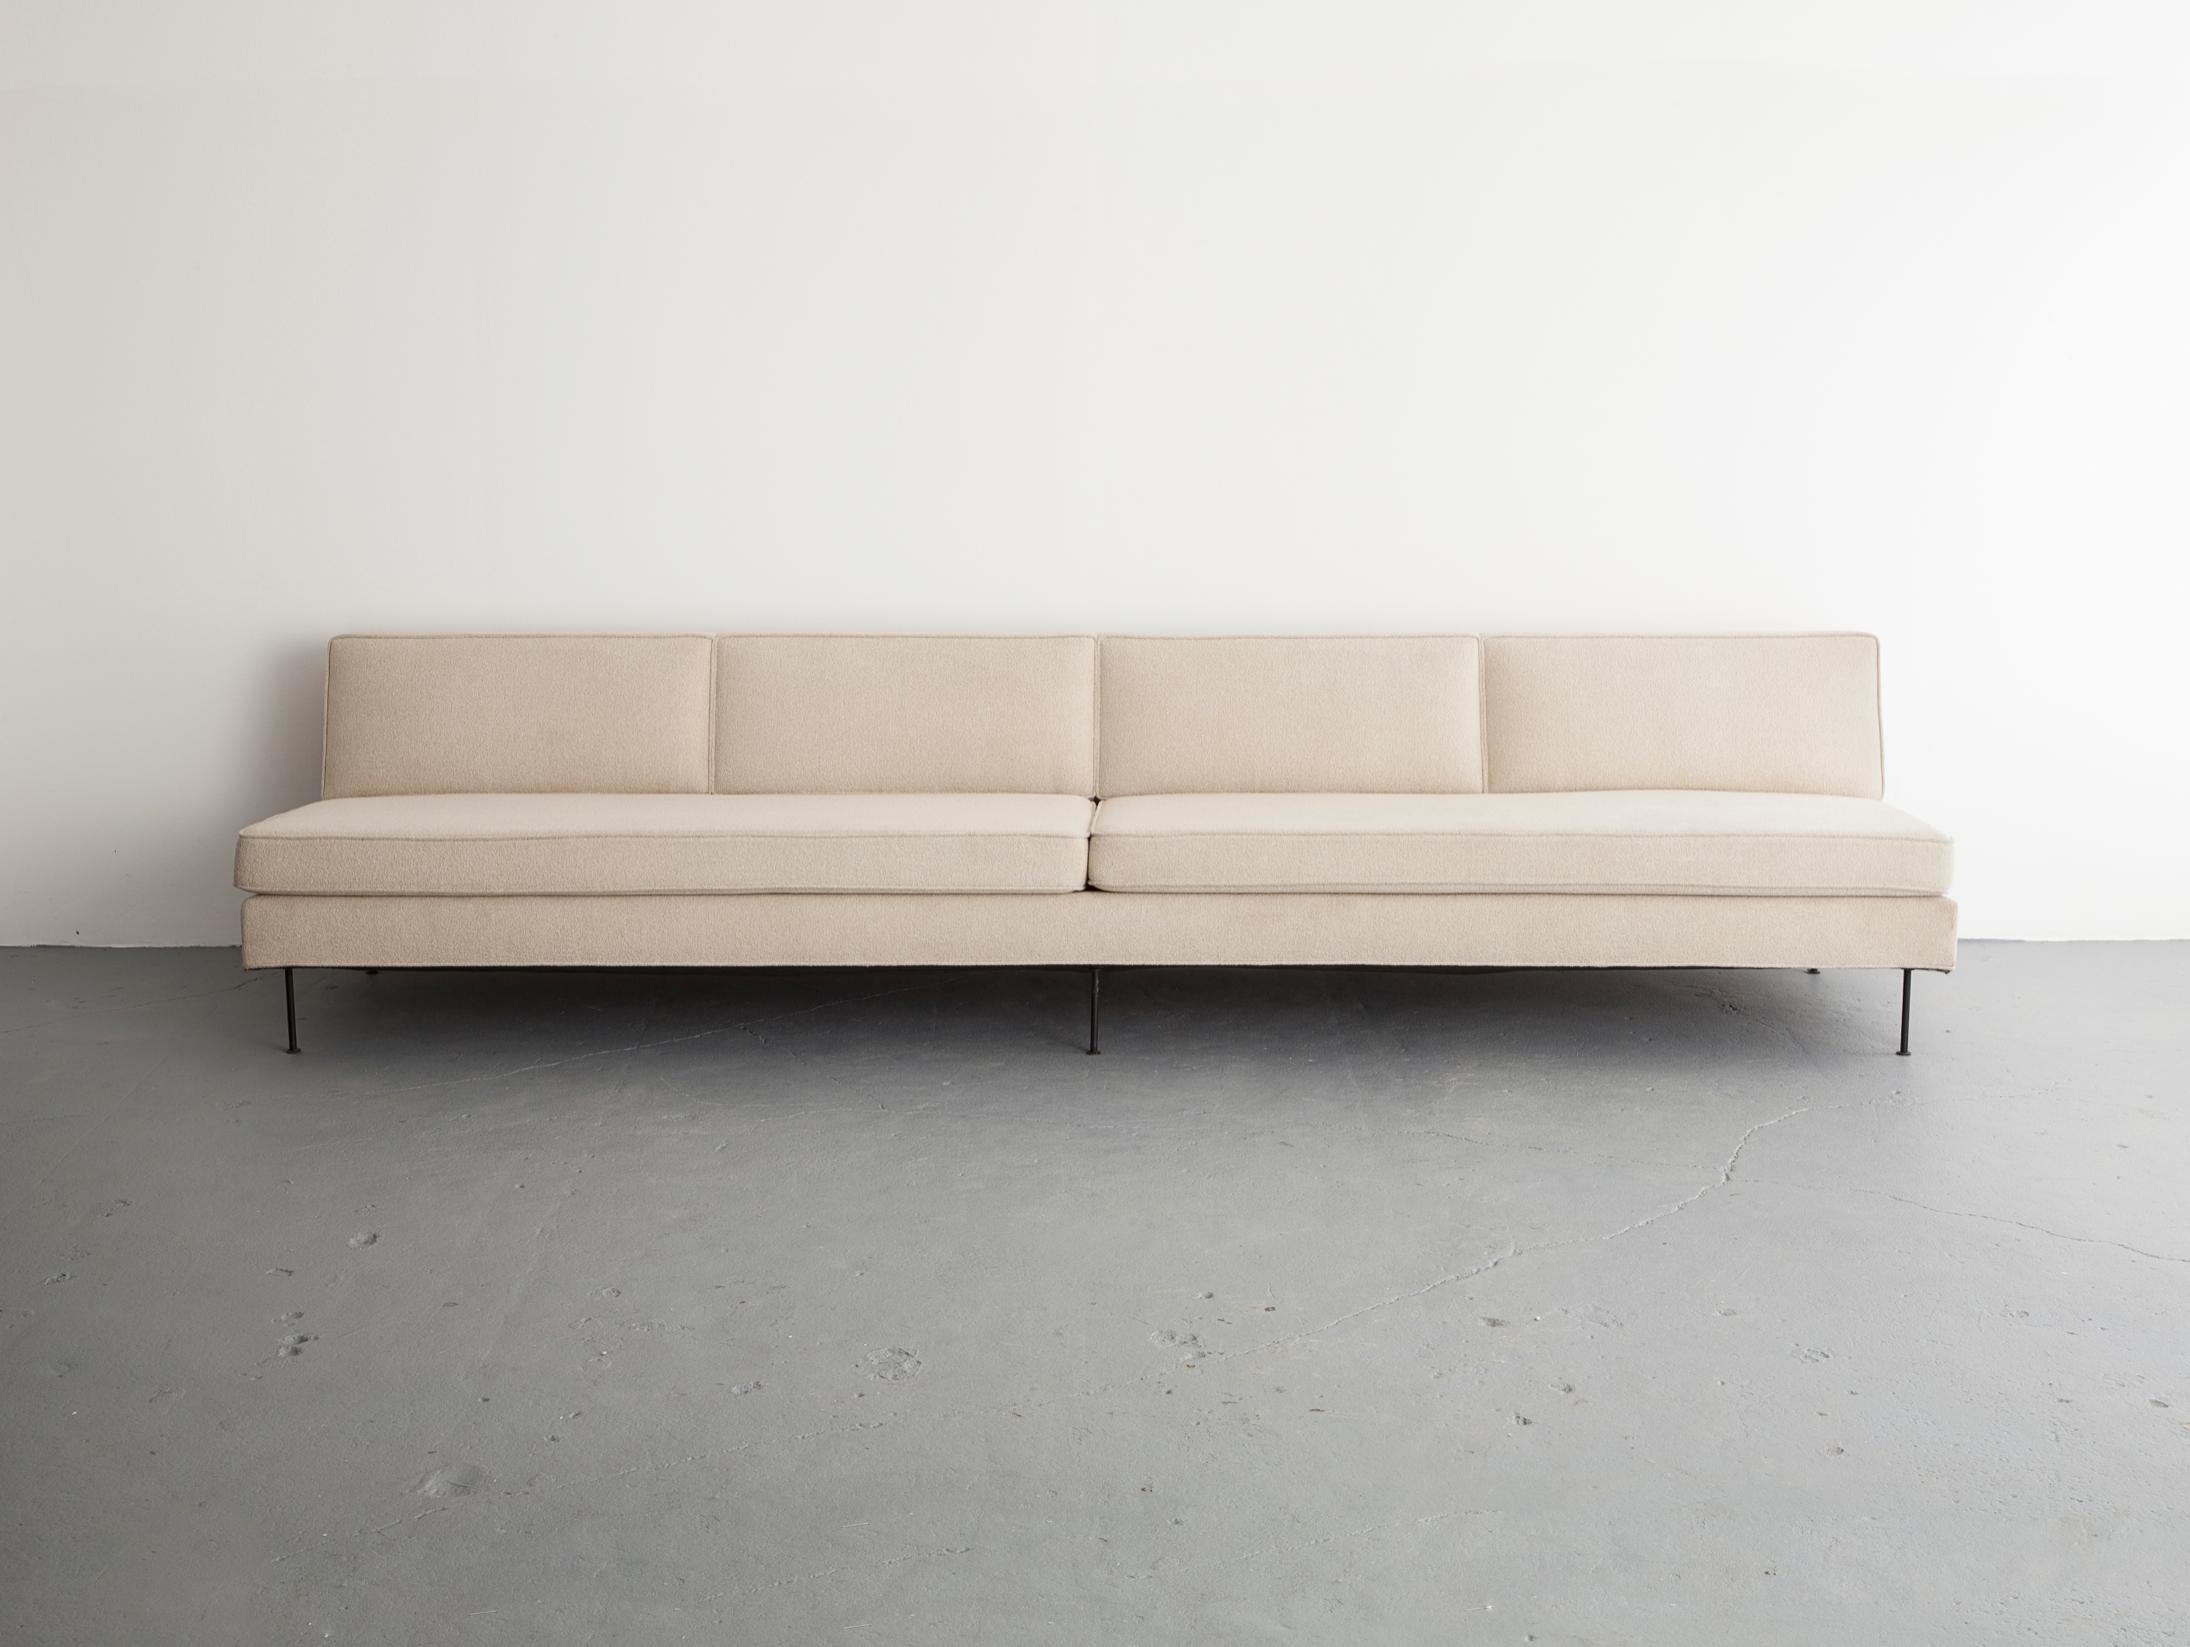 American Custom Upholstered Four-Seat Sofa by Greta Magnusson Grossman